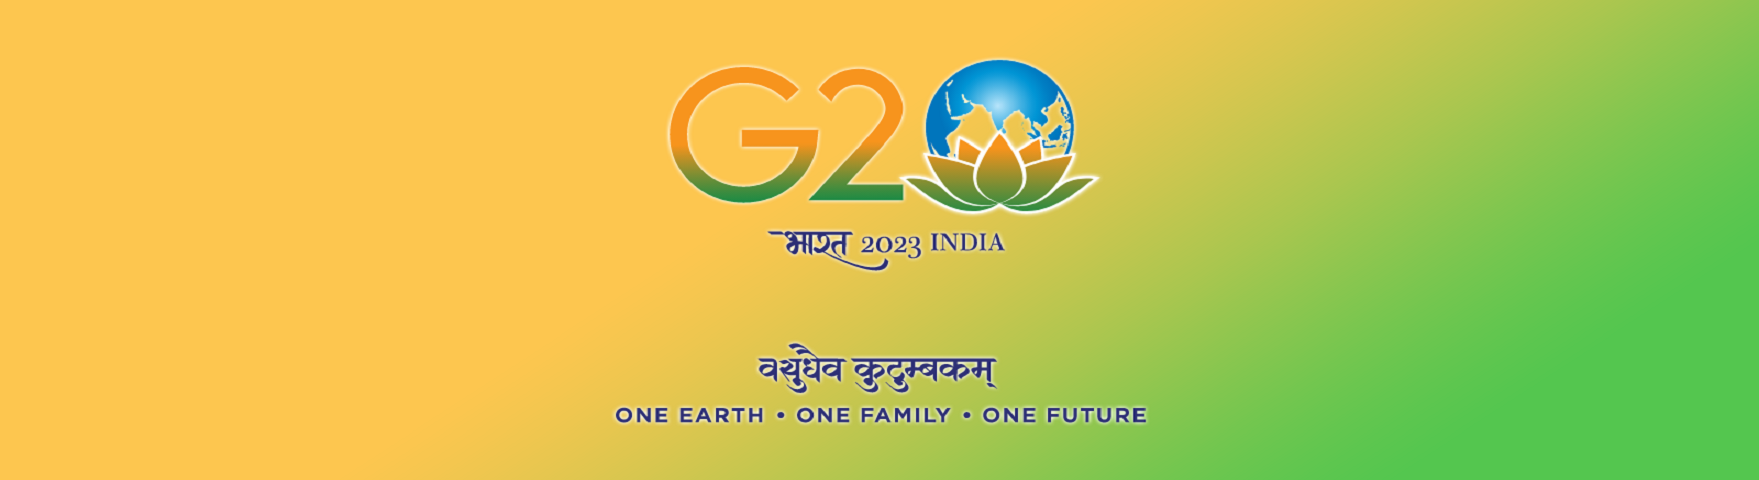 G20 Bharat